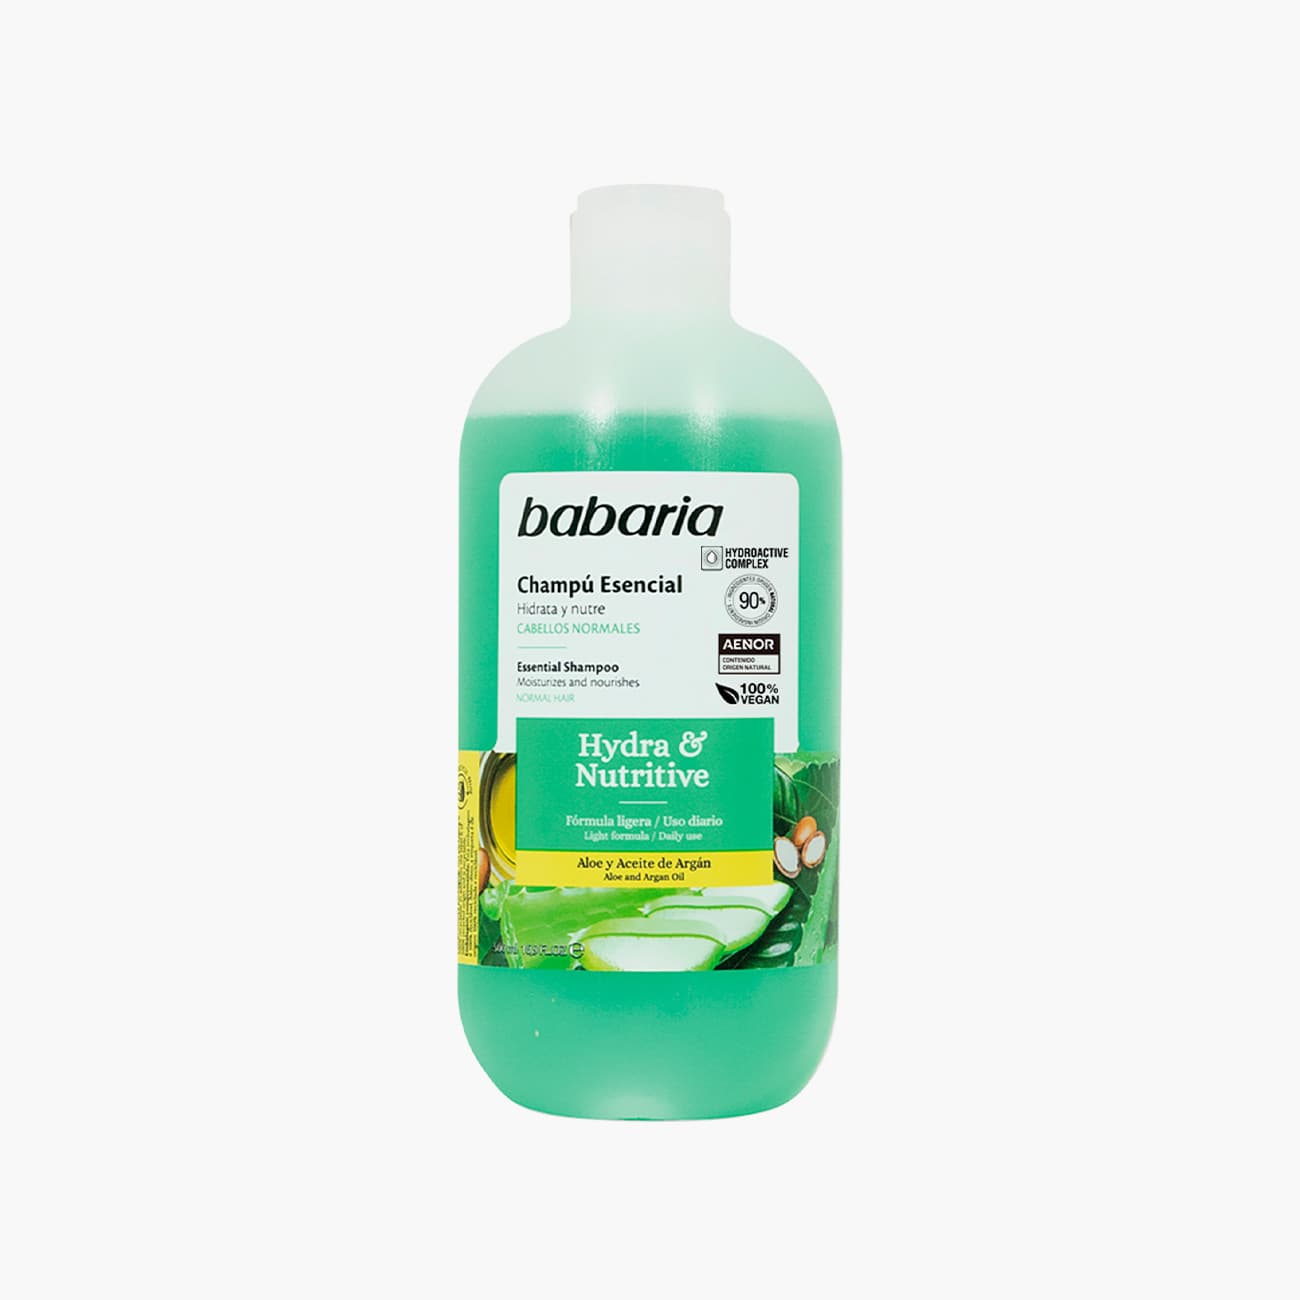 Hydra & Nutritive Essential Shampoo